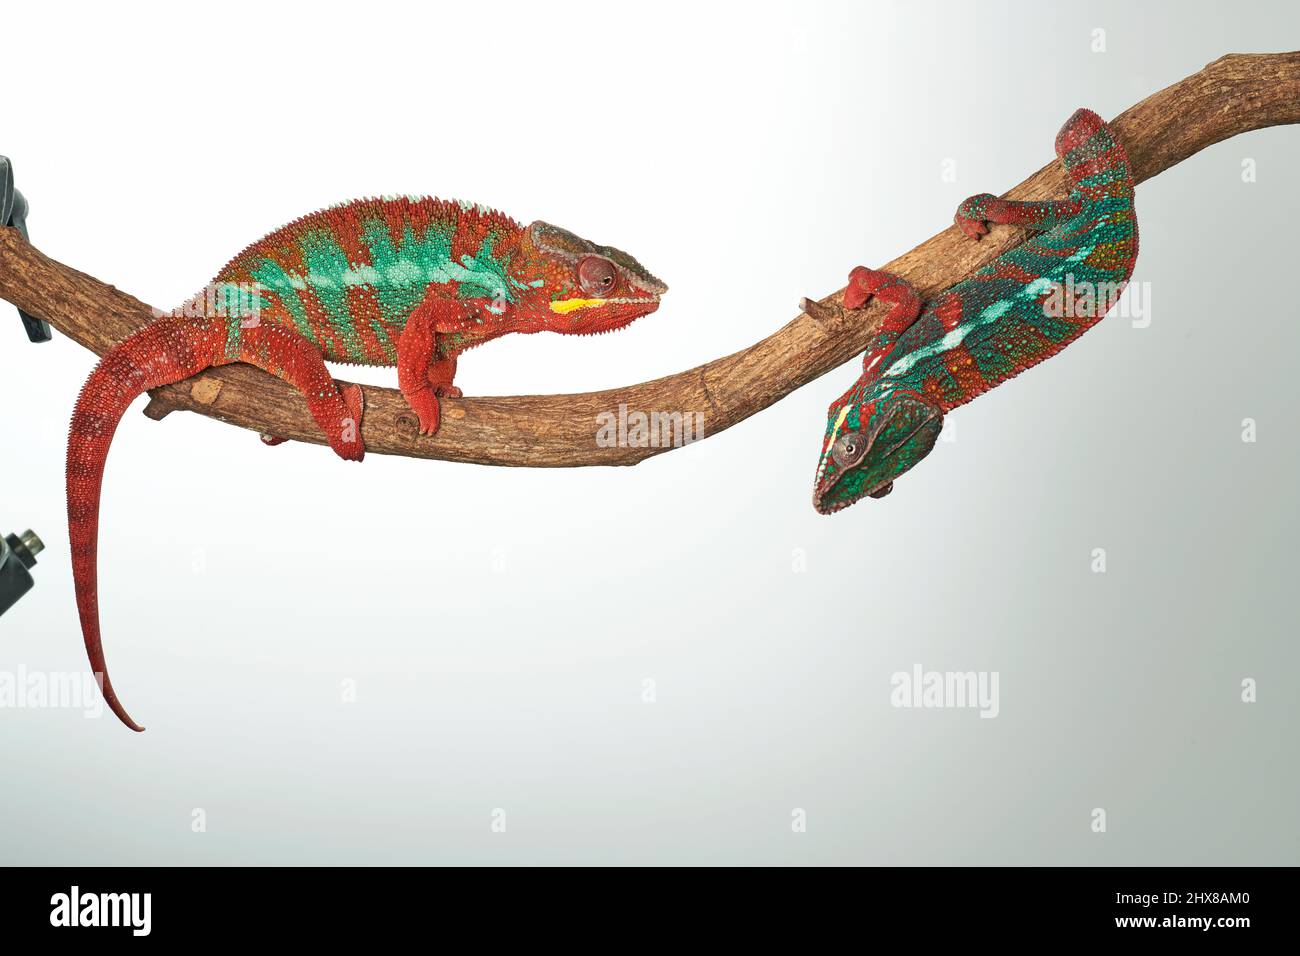 Panther chameleon, Furcifer pardalis, maschio sottomesso (destra) dà il posto al maschio dominante (sinistra). Il colore del maschio sottomesso si sbiadisce, il colore dominante del maschio si illumina. Foto Stock